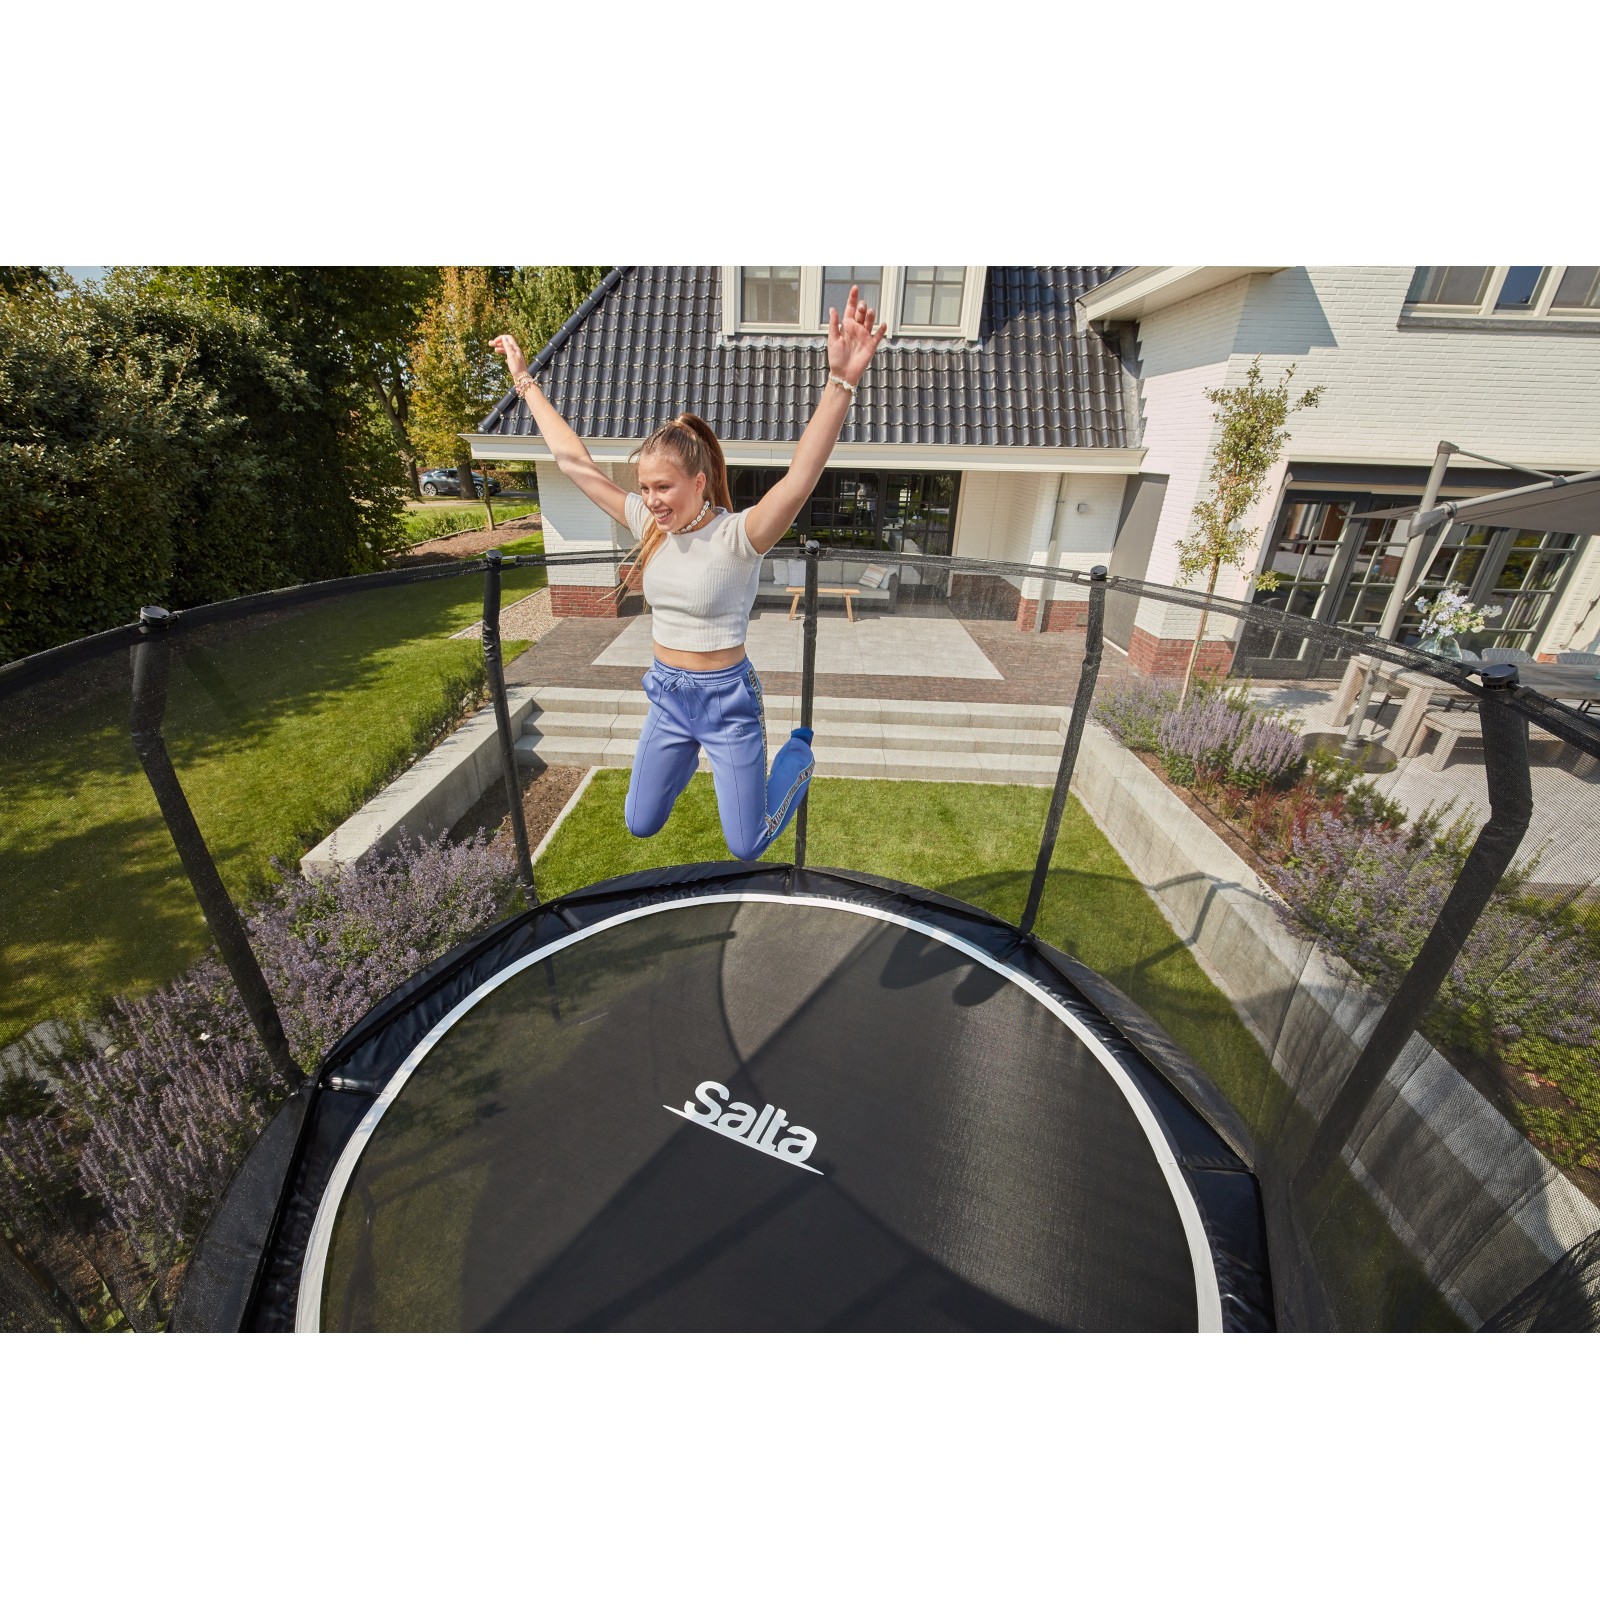 Resonate symptom Learner Salta trampoline First Class - Fitshop